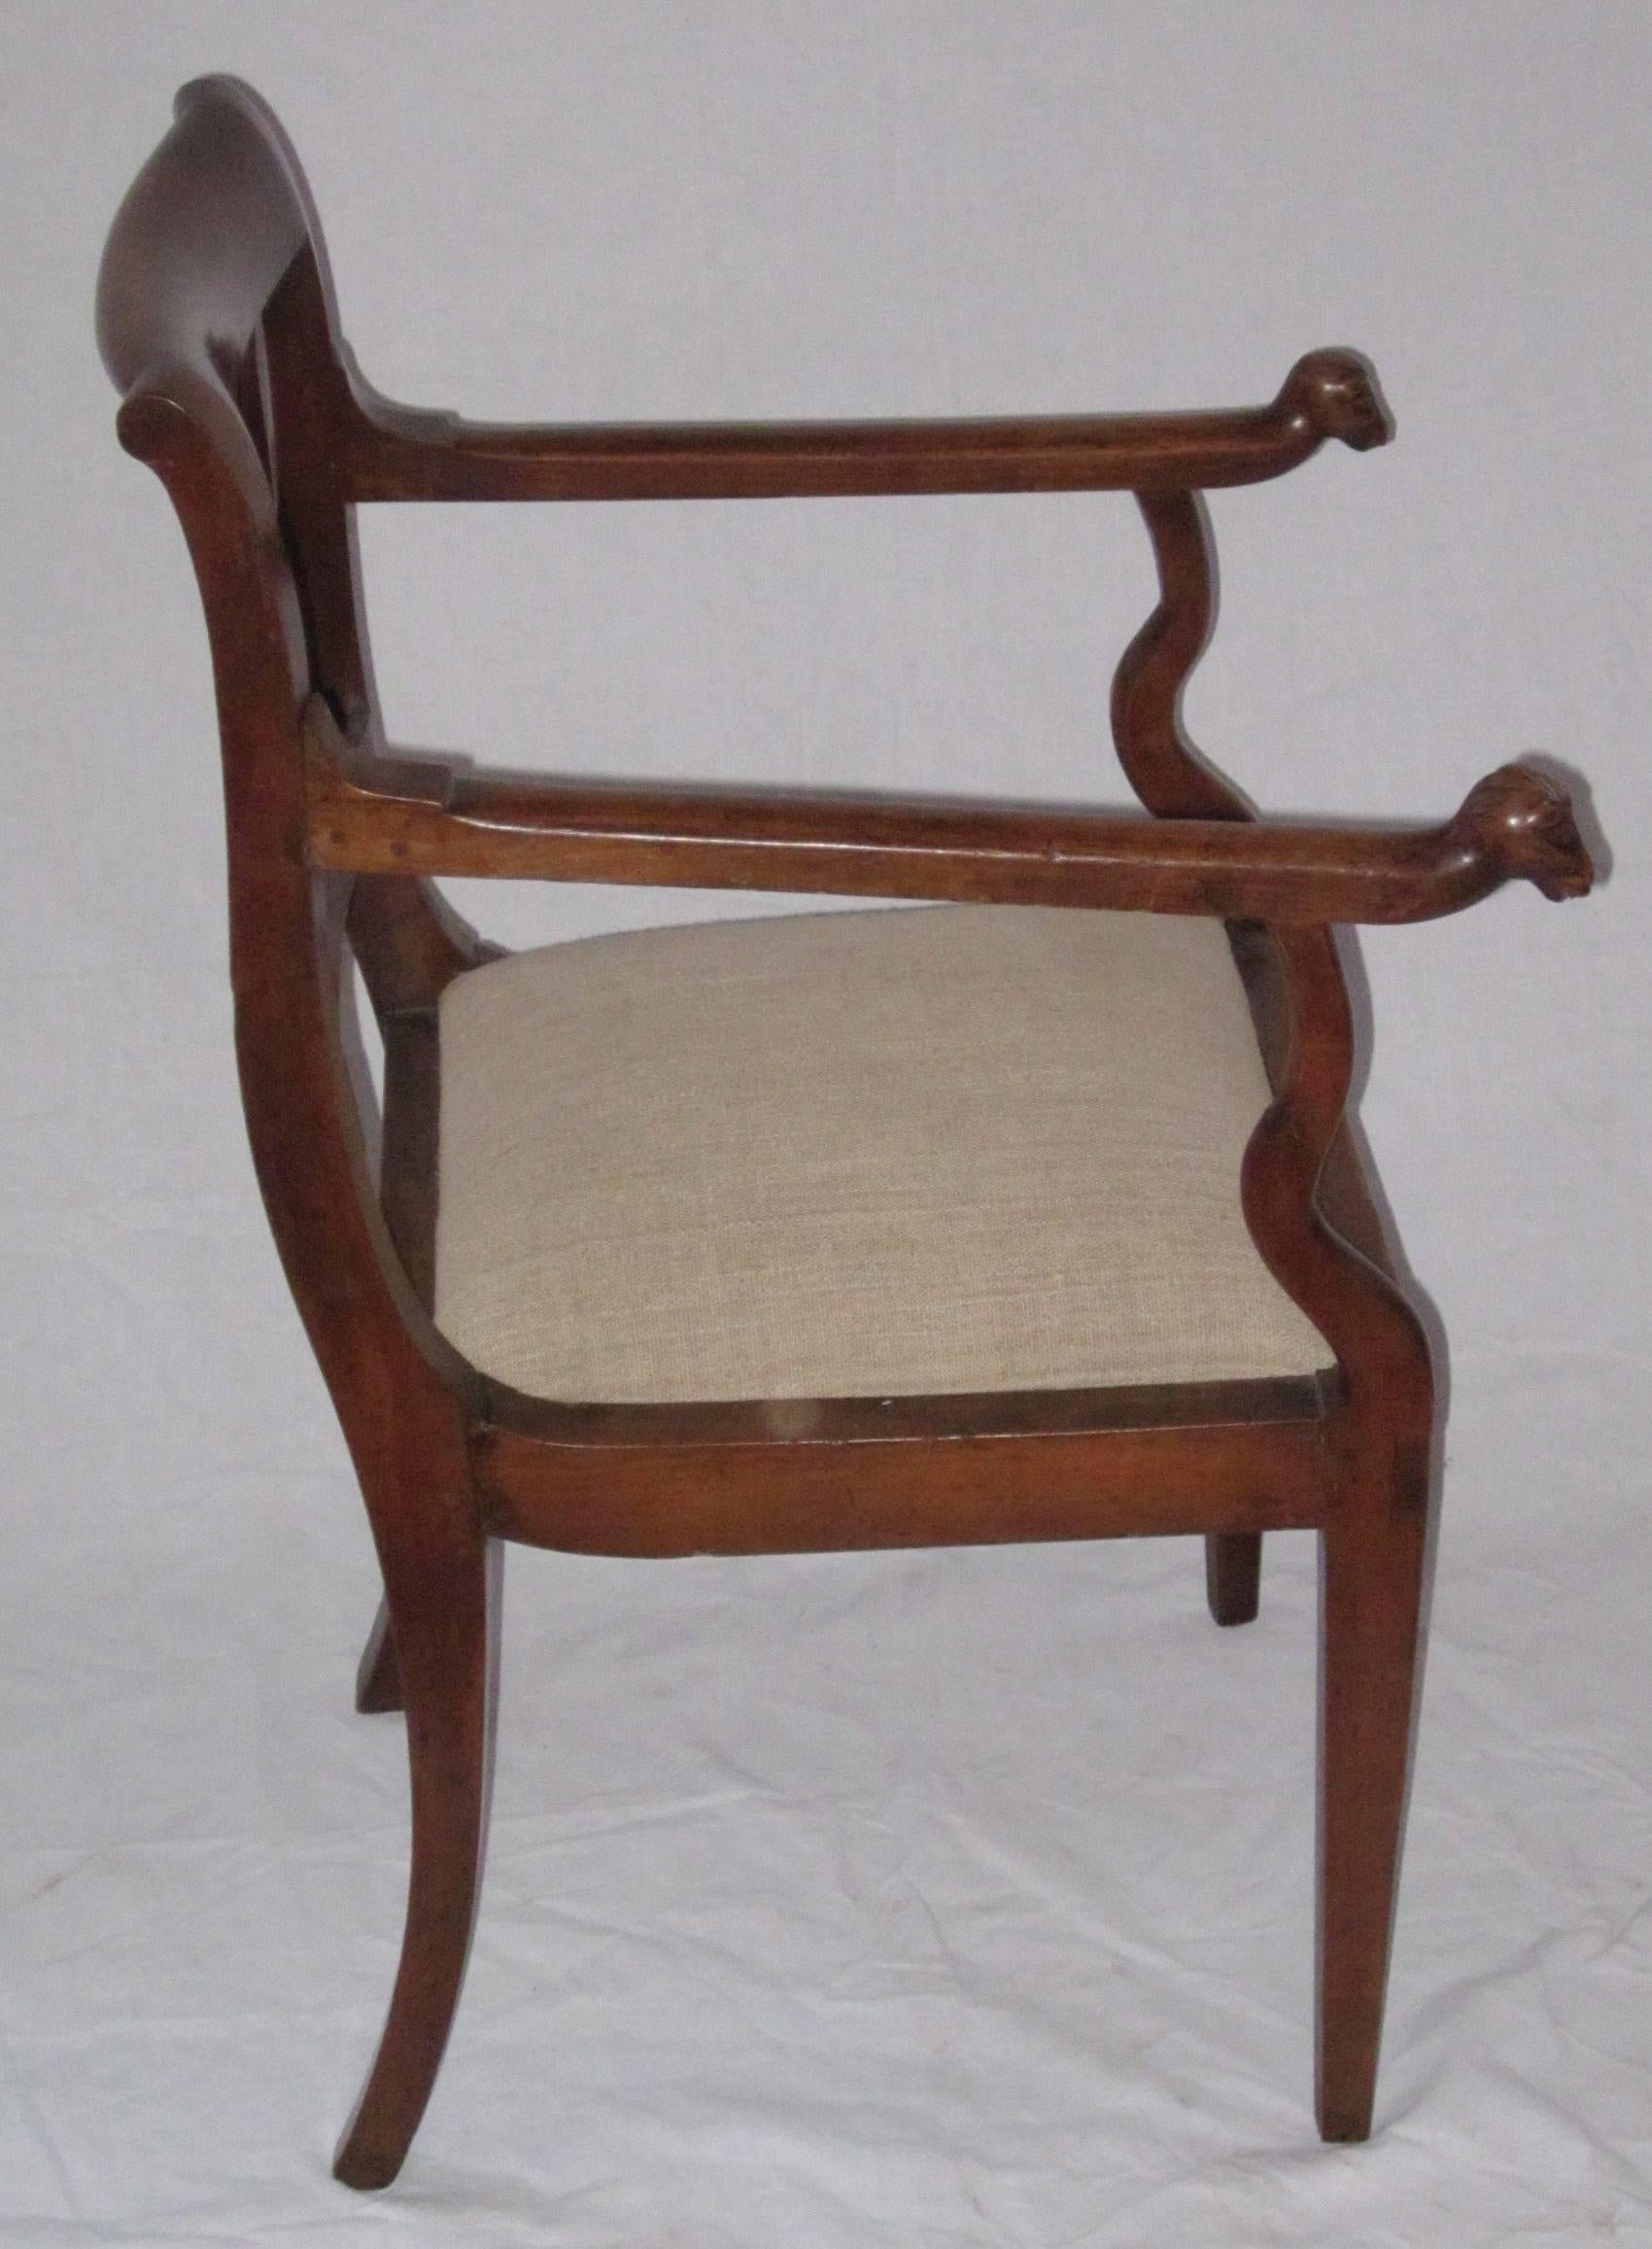 Walnut 18th Century English Armchair or Desk Chair, Decorative Animal Face Detail